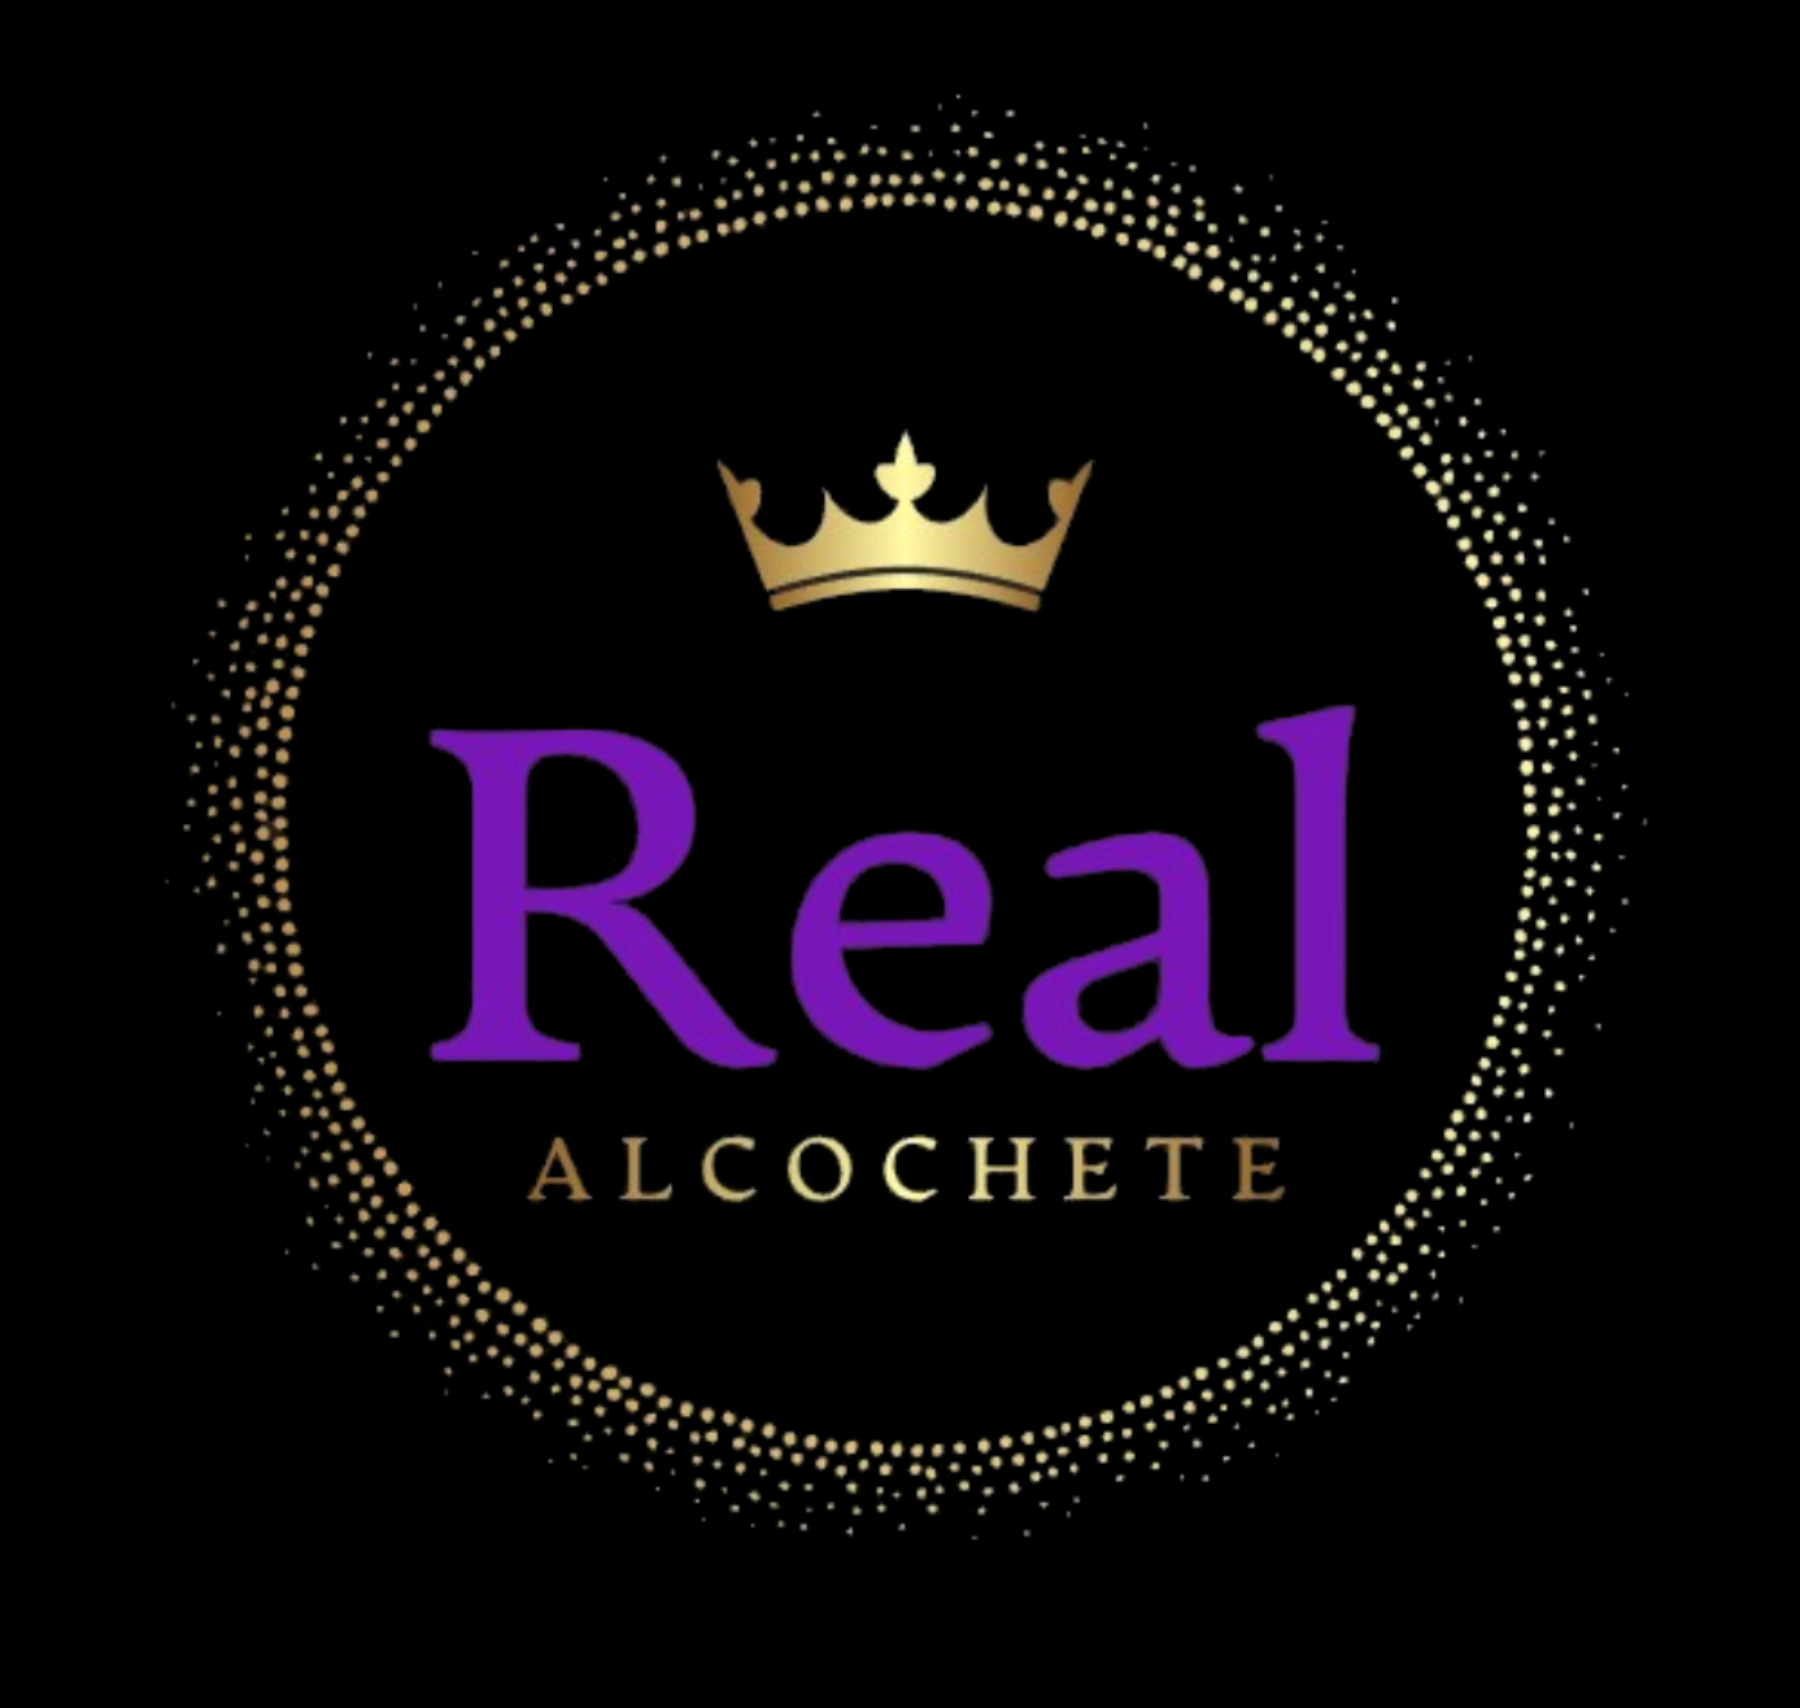 Real Alcochete